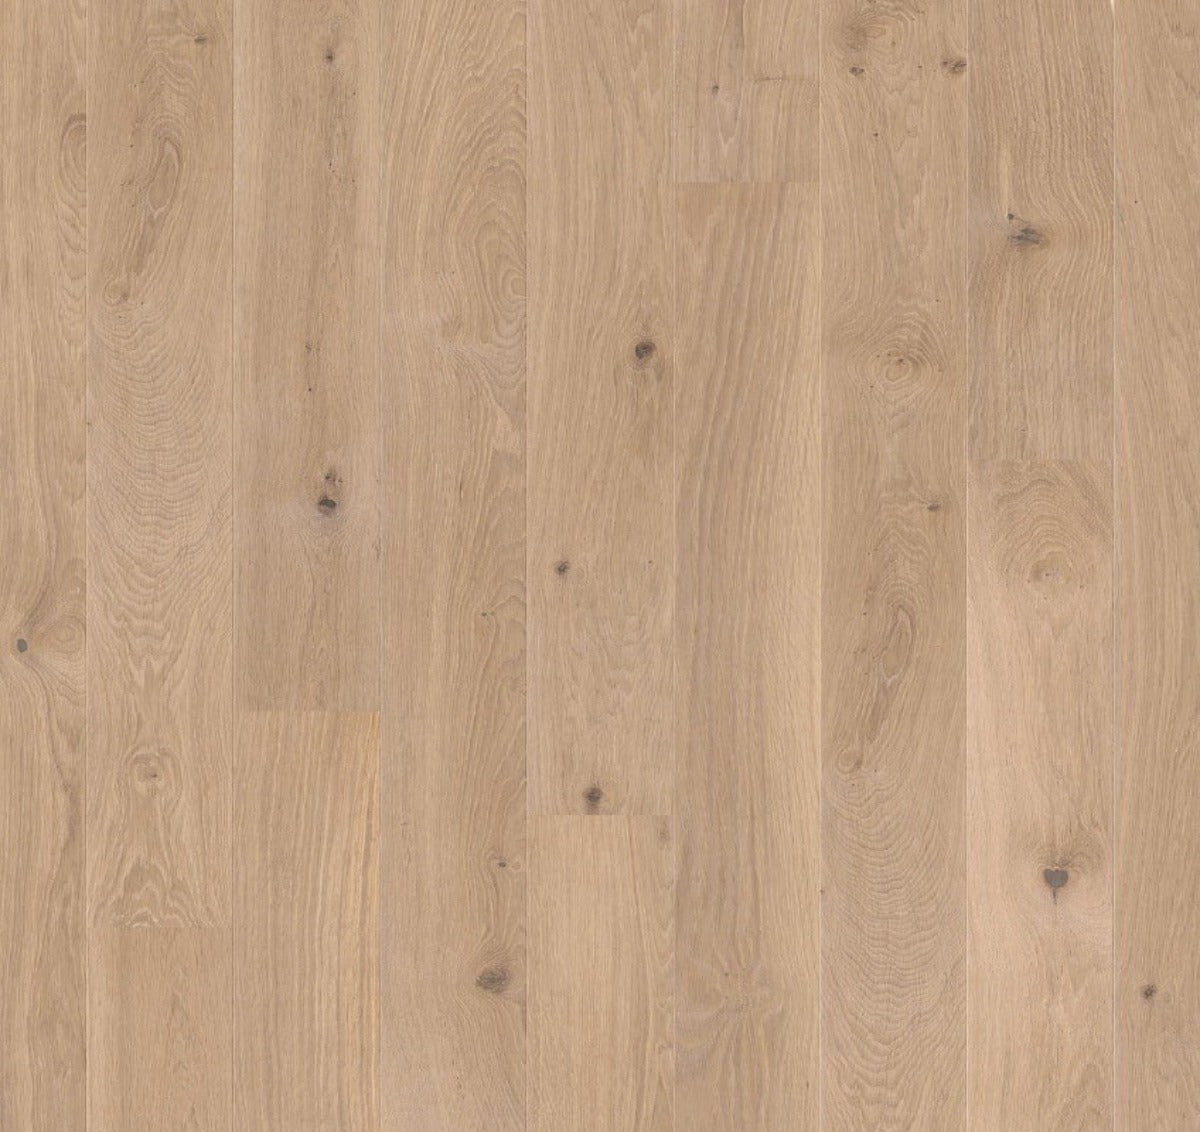 fixed length engineered hardwood flooring planks Swell by Stuga